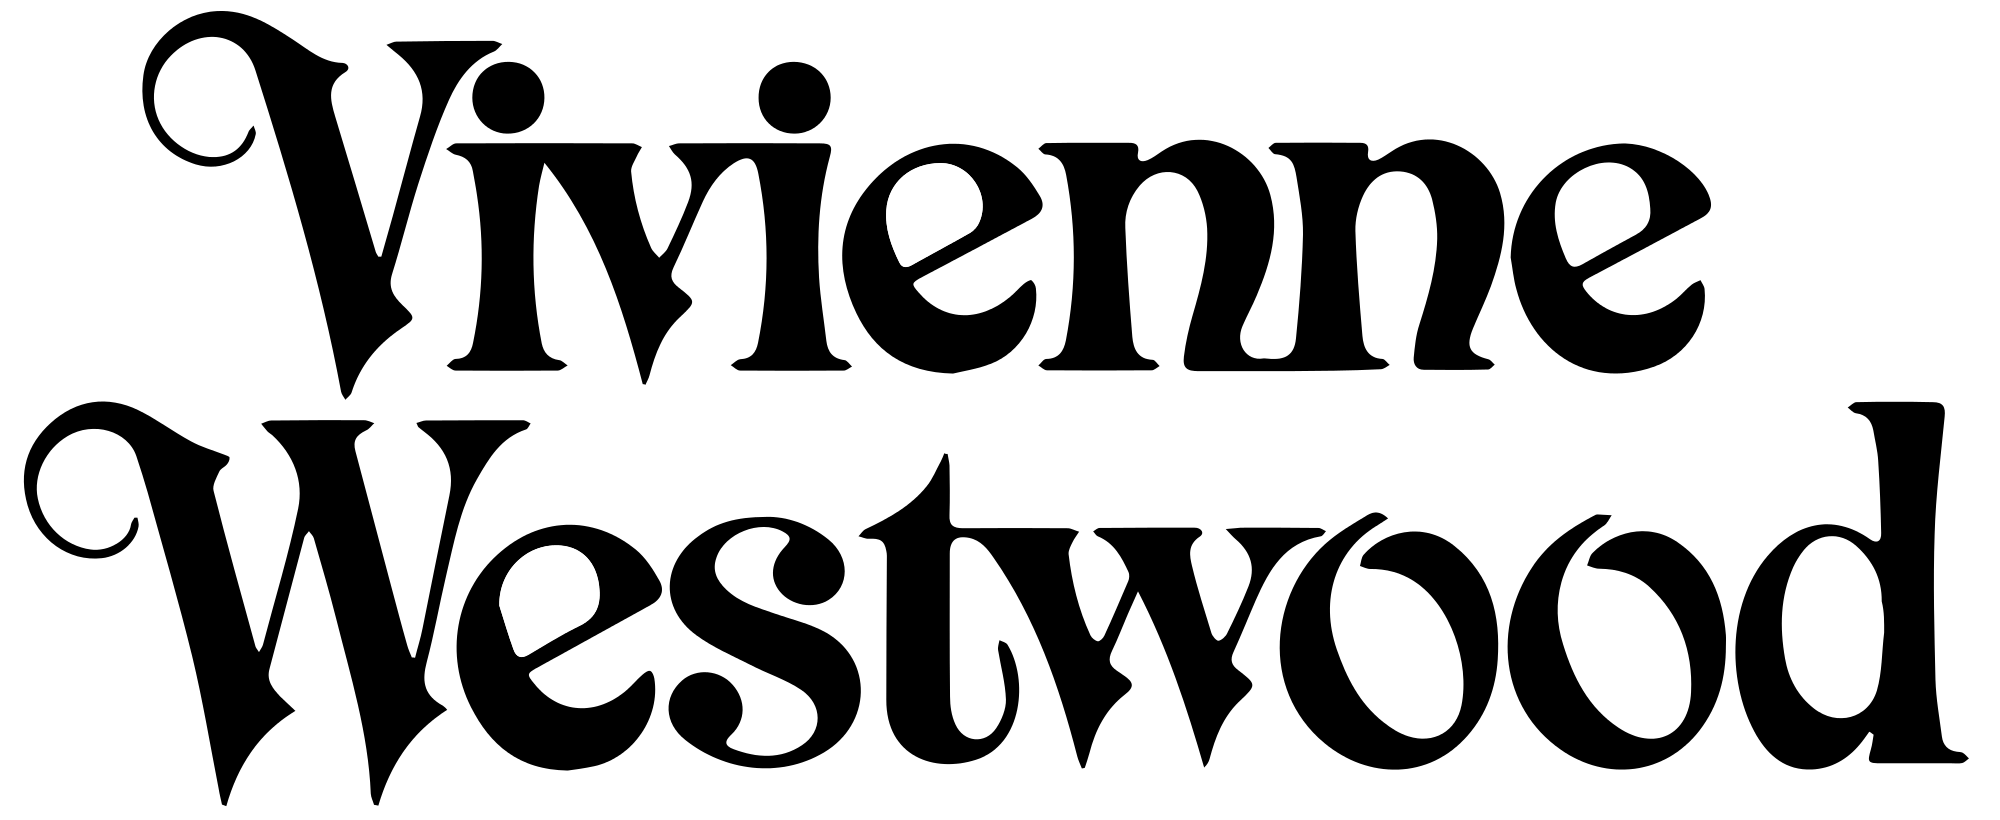 Vivienne Westwood Logo - File:VivienneWestwood.svg - Wikimedia Commons